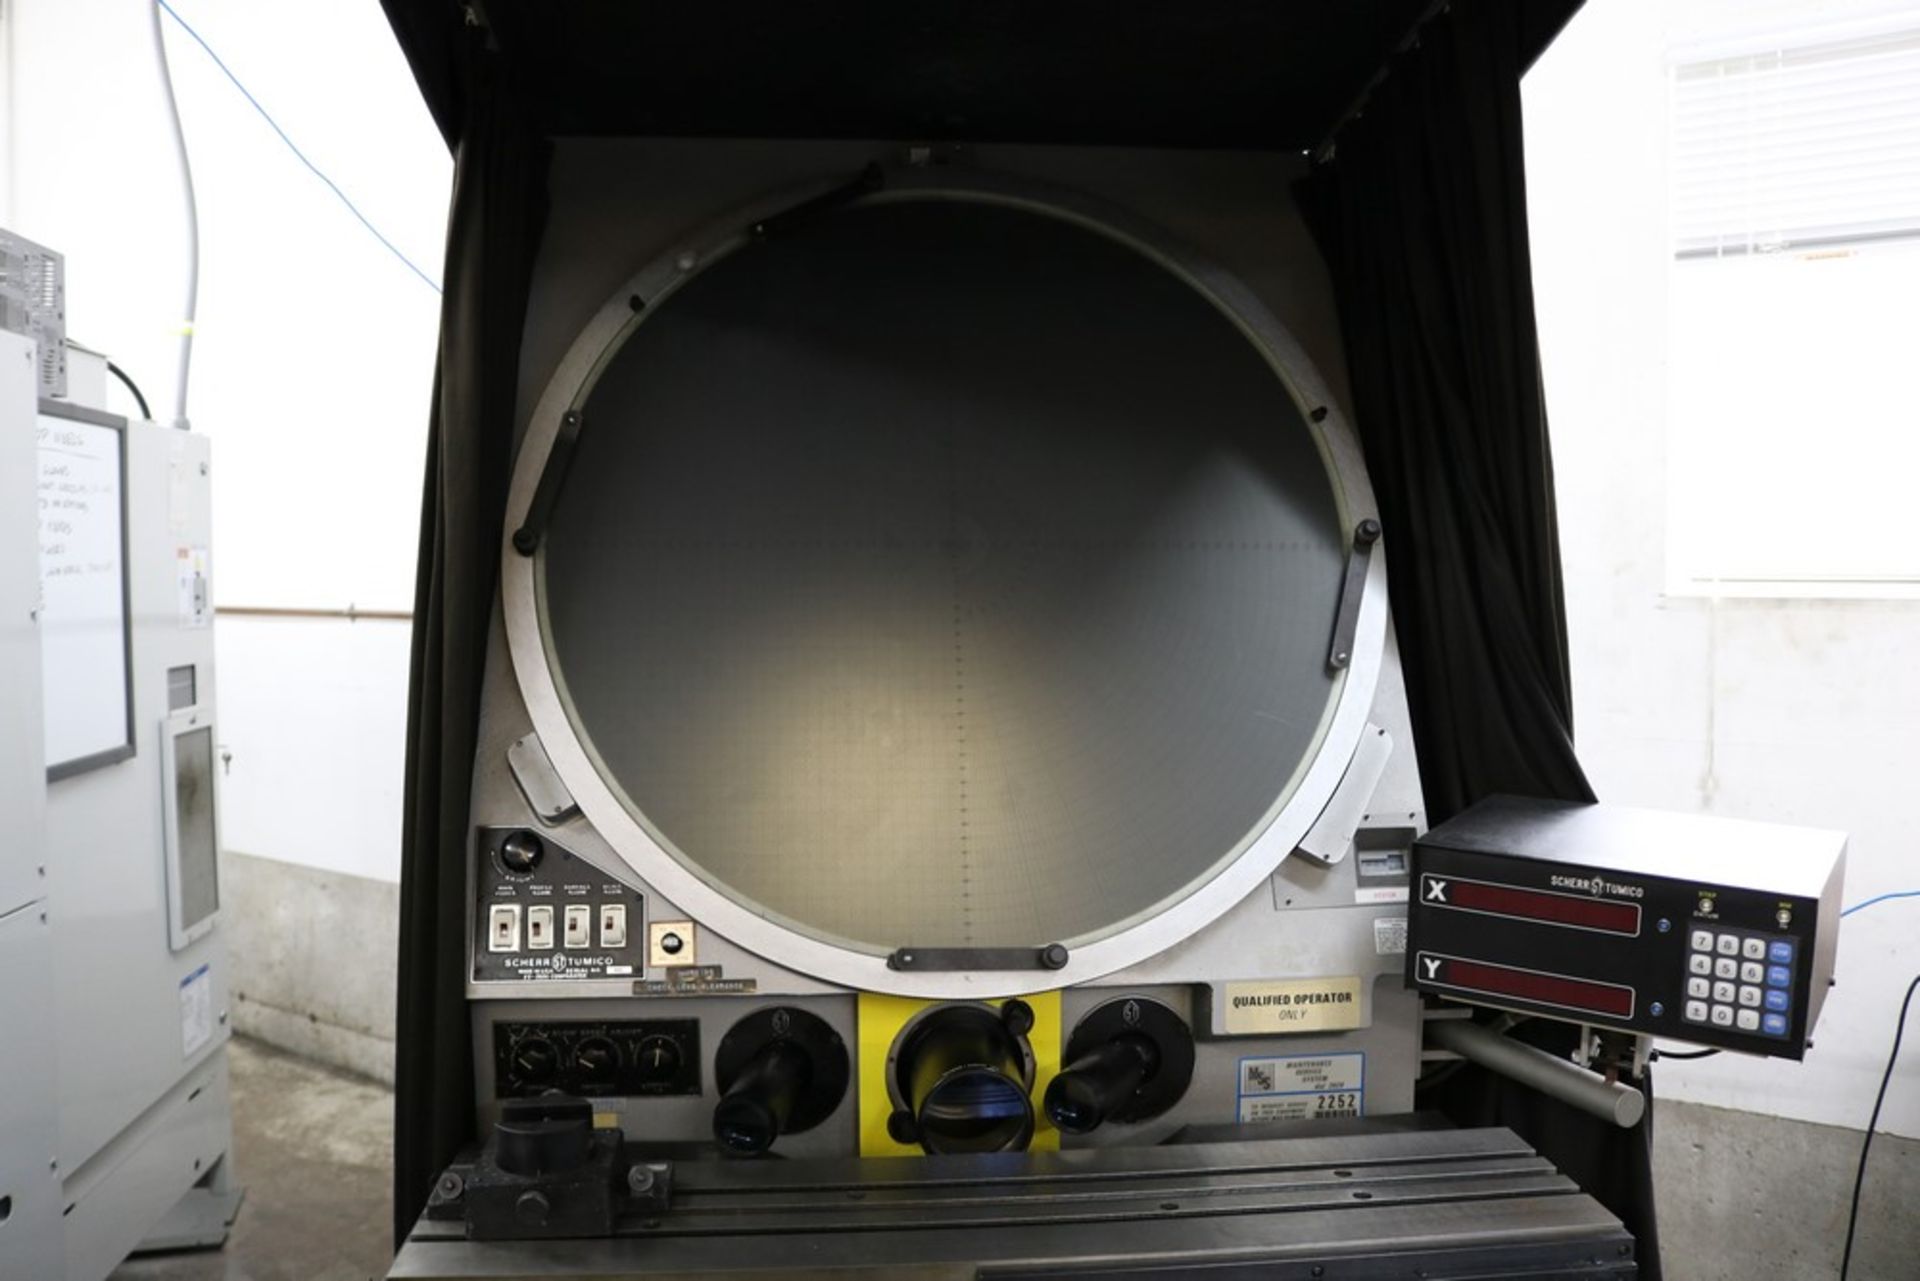 Scherr Tumico Large Capacity Optical Comparator with Scherr Tumico DRO, S/N 862 - Image 3 of 11